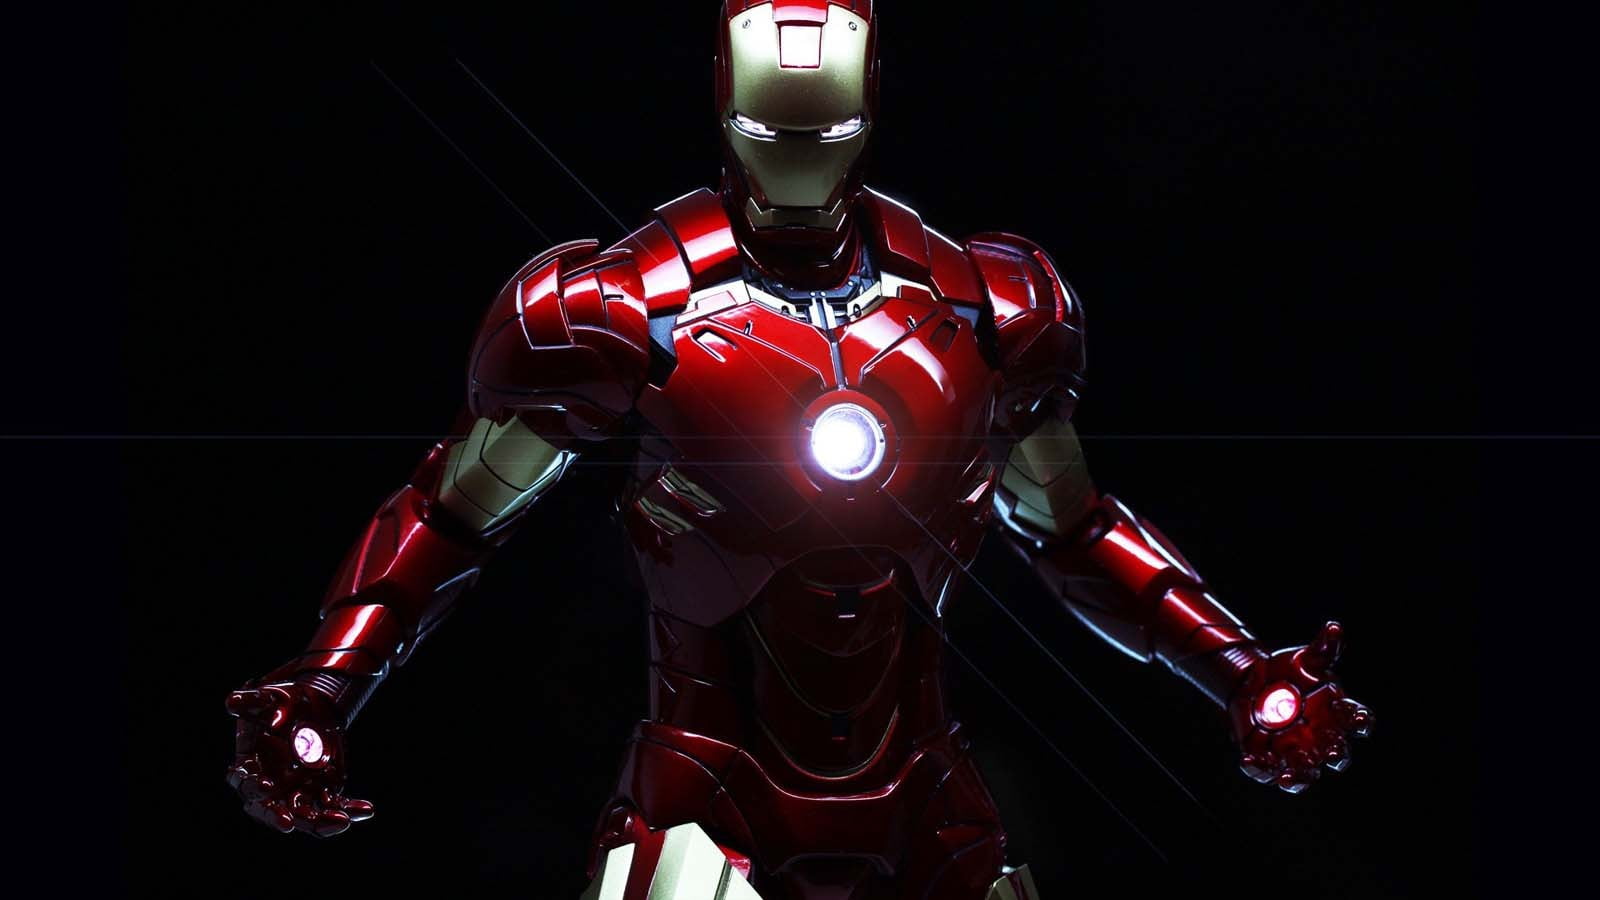 Marvel Iron-Man digital art, Iron Man, indoors, black background